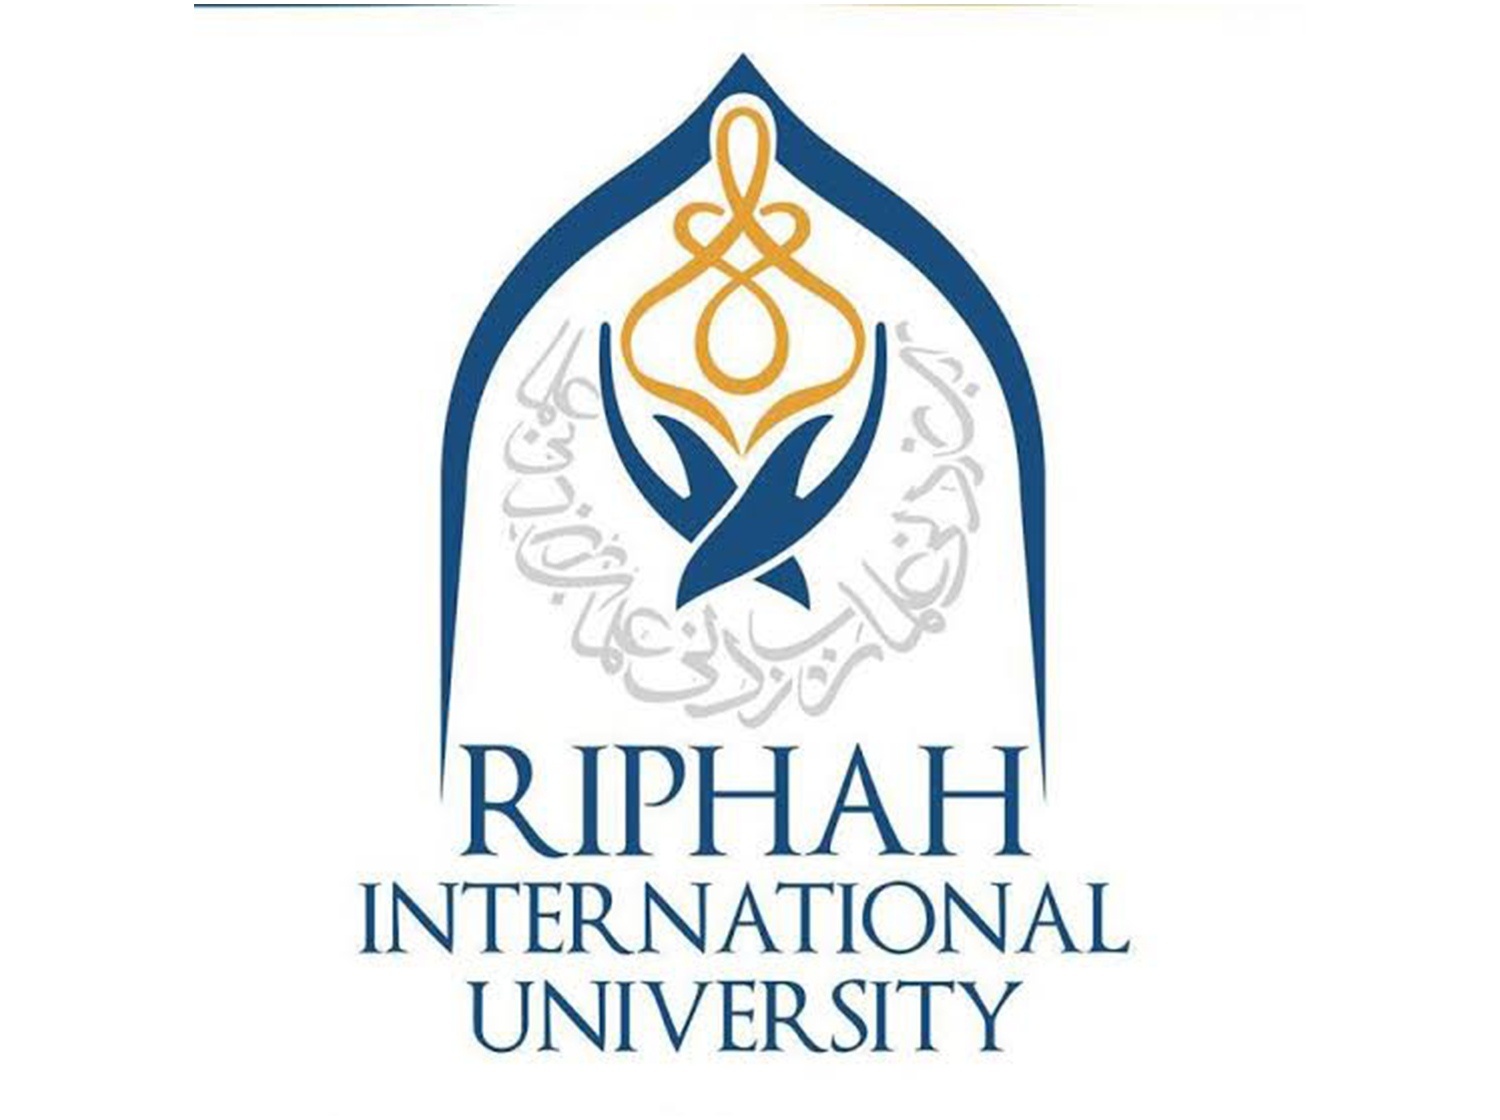 Riphah international university pfm client